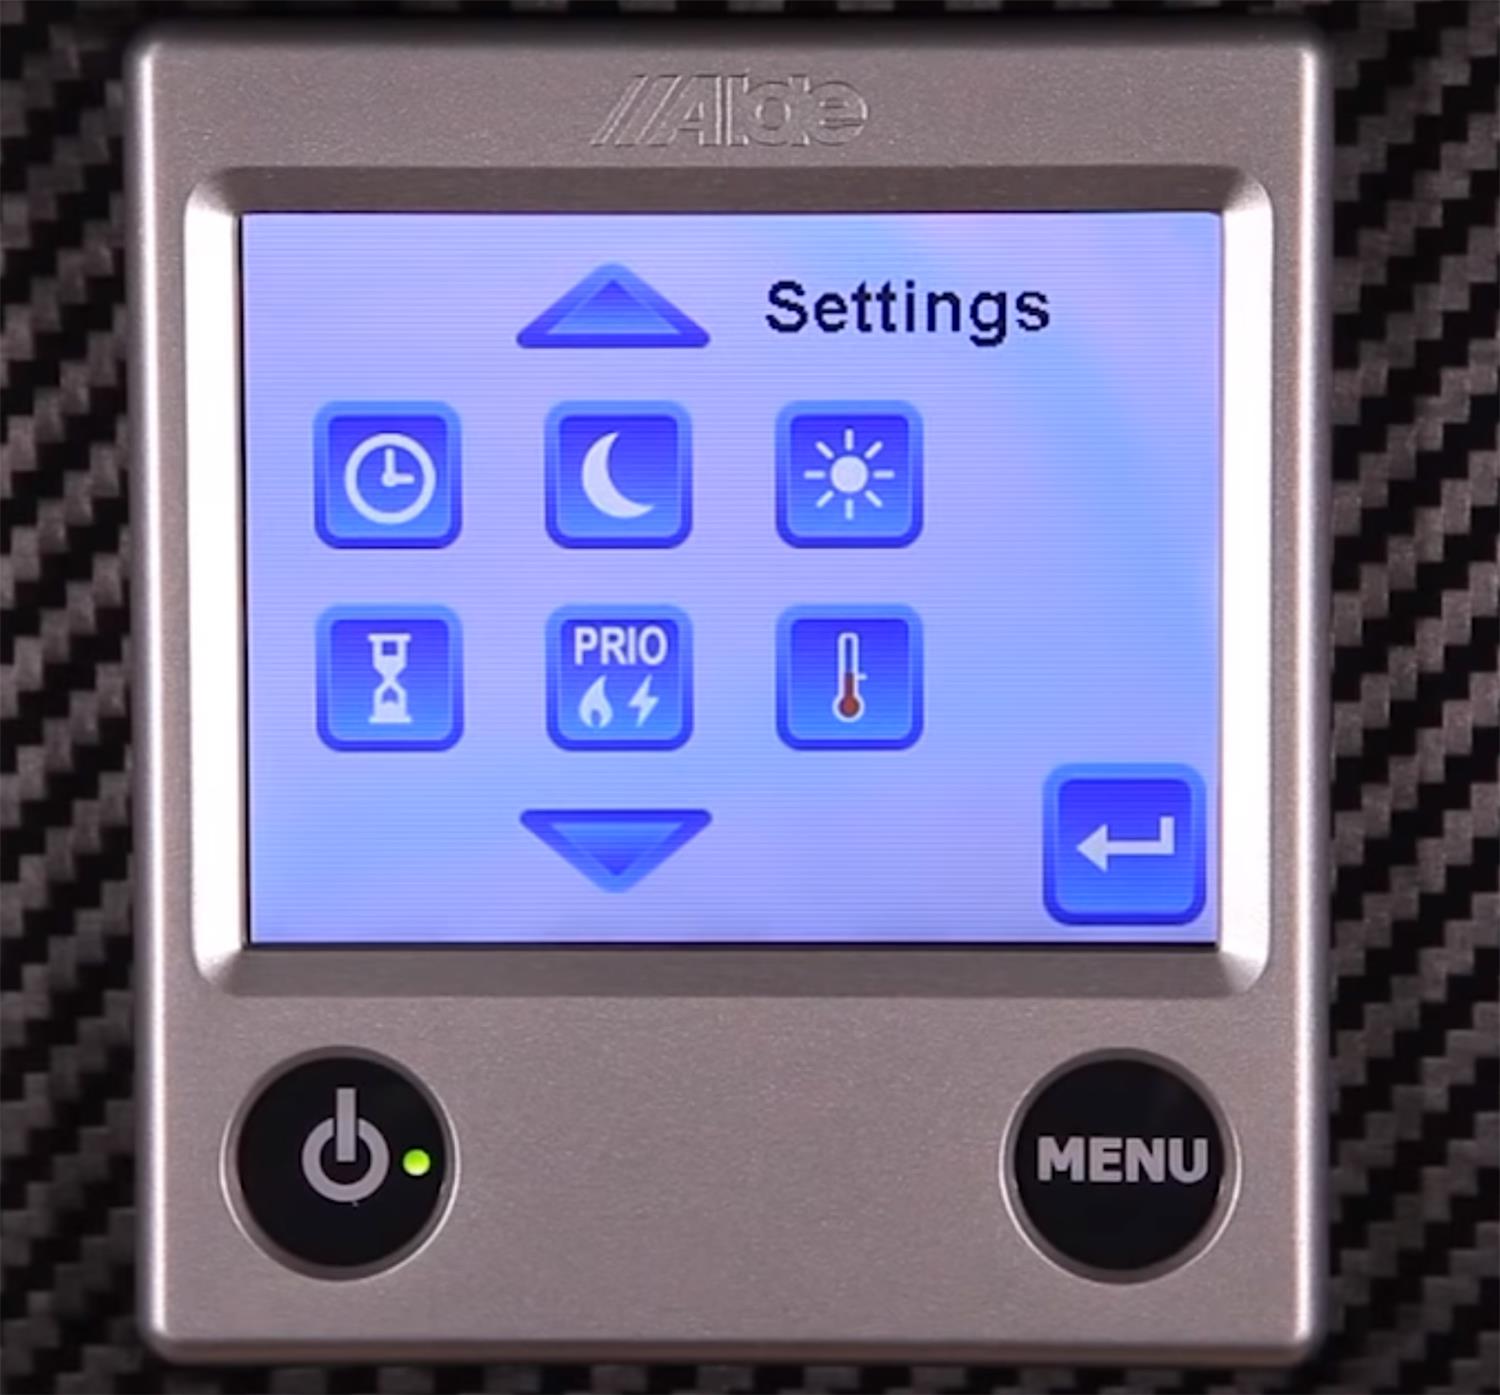 Alde 3020 Control panel Advanced settings screen.